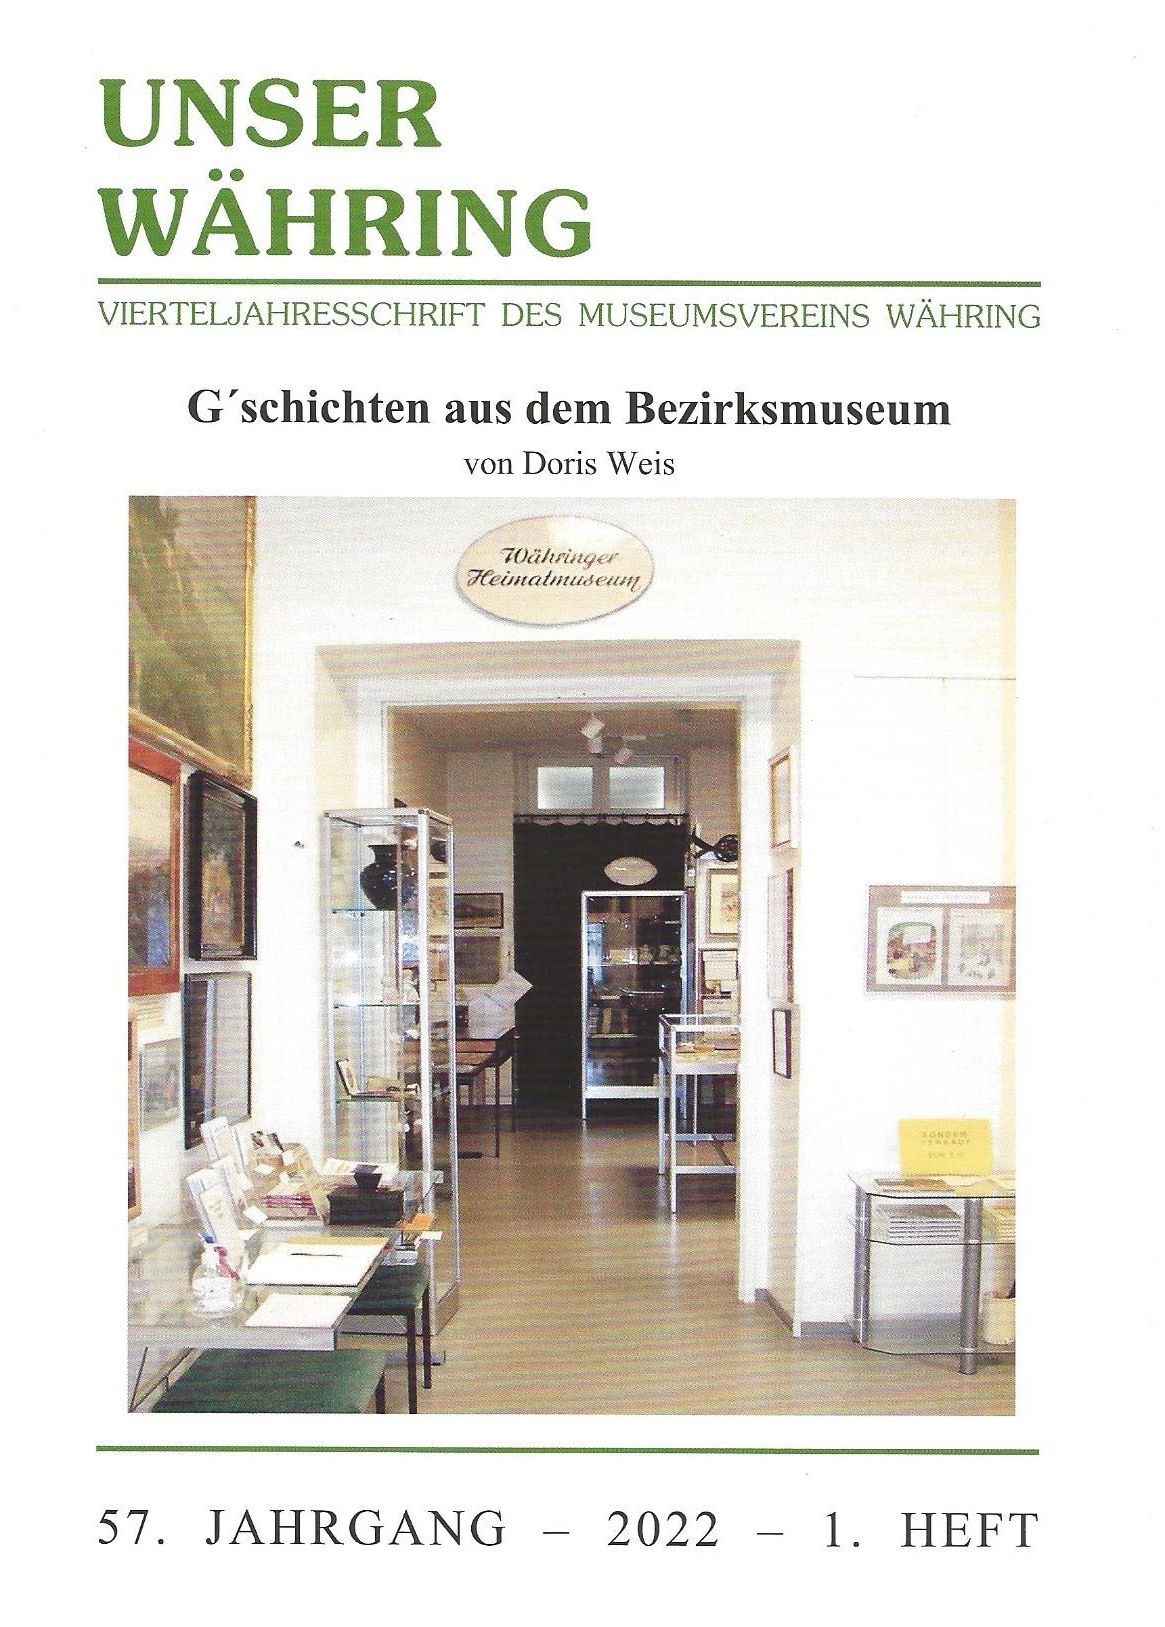 Publikation: G'schichten aus dem Bezirksmuseum, Bezirksmuseum Währing